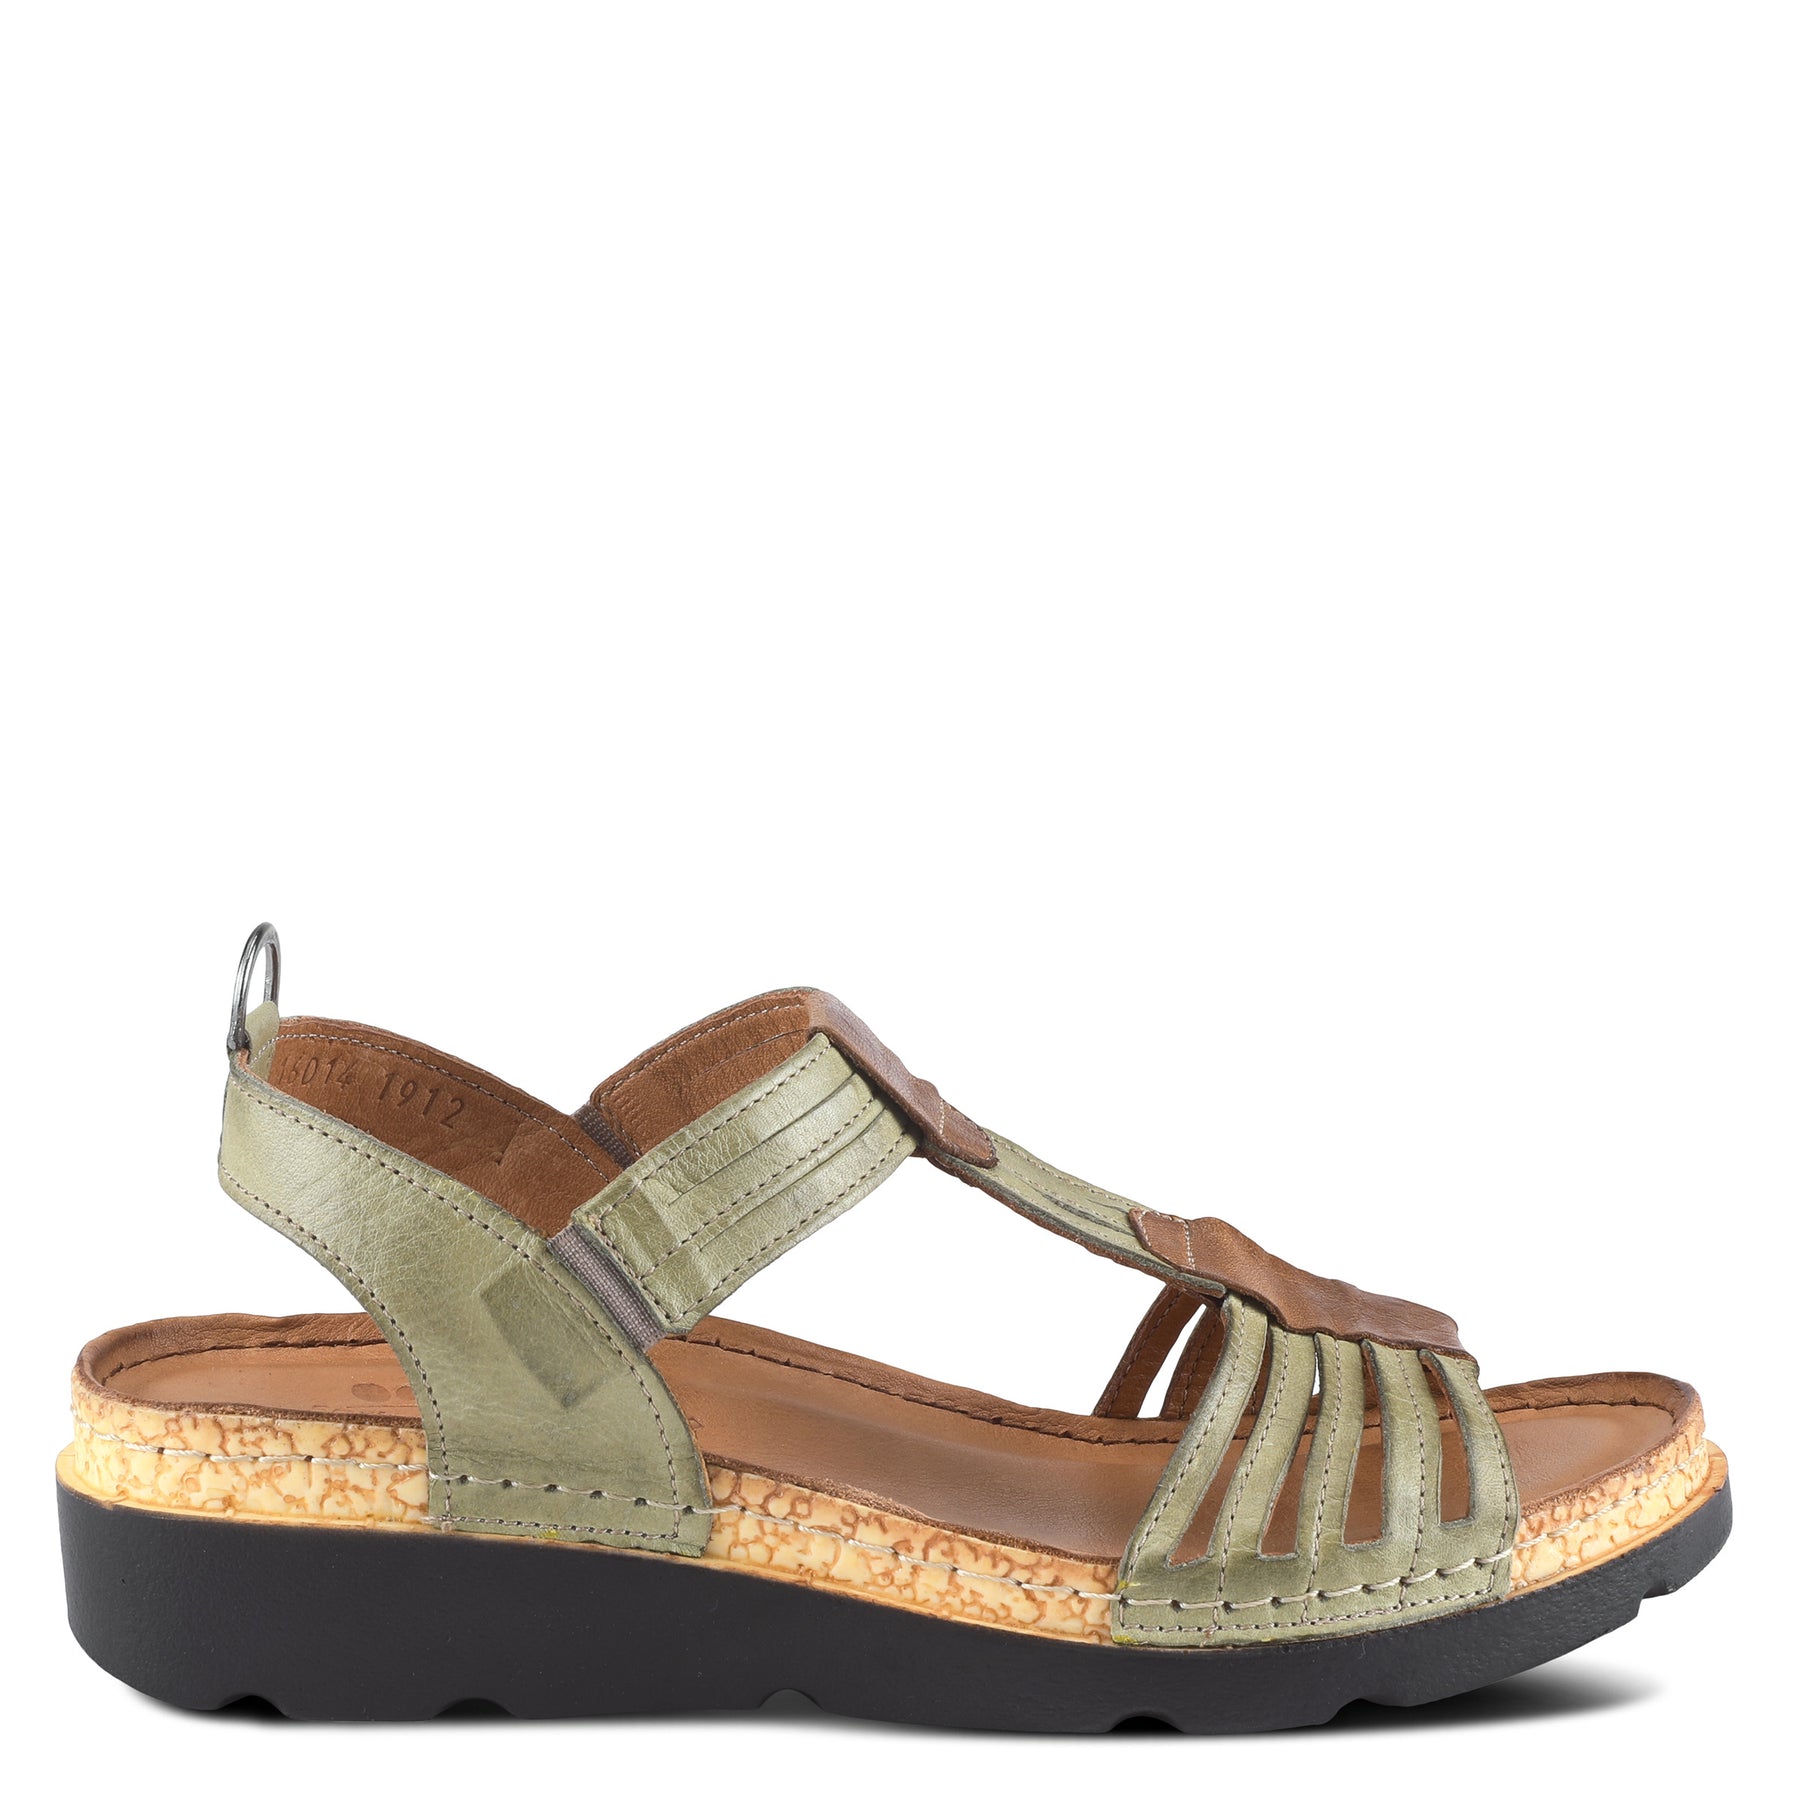 KASBA SANDAL by STEP – Spring Step Shoes